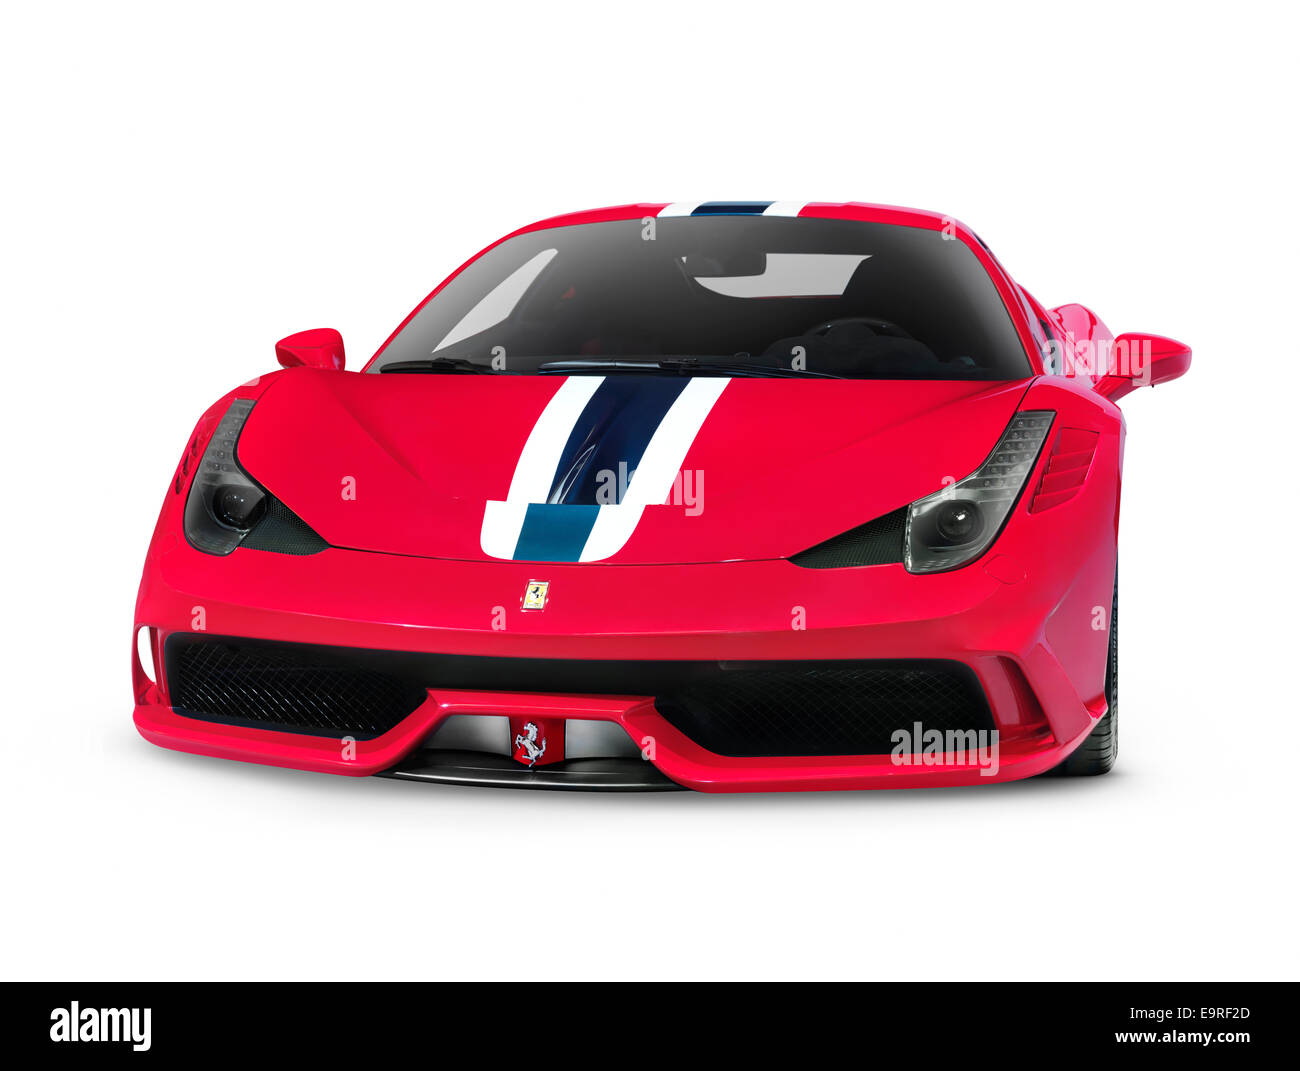 Licencia e impresiones en MaximImages.com - Ferrari coche deportivo de lujo, supercoche, automotor foto de archivo. Foto de stock